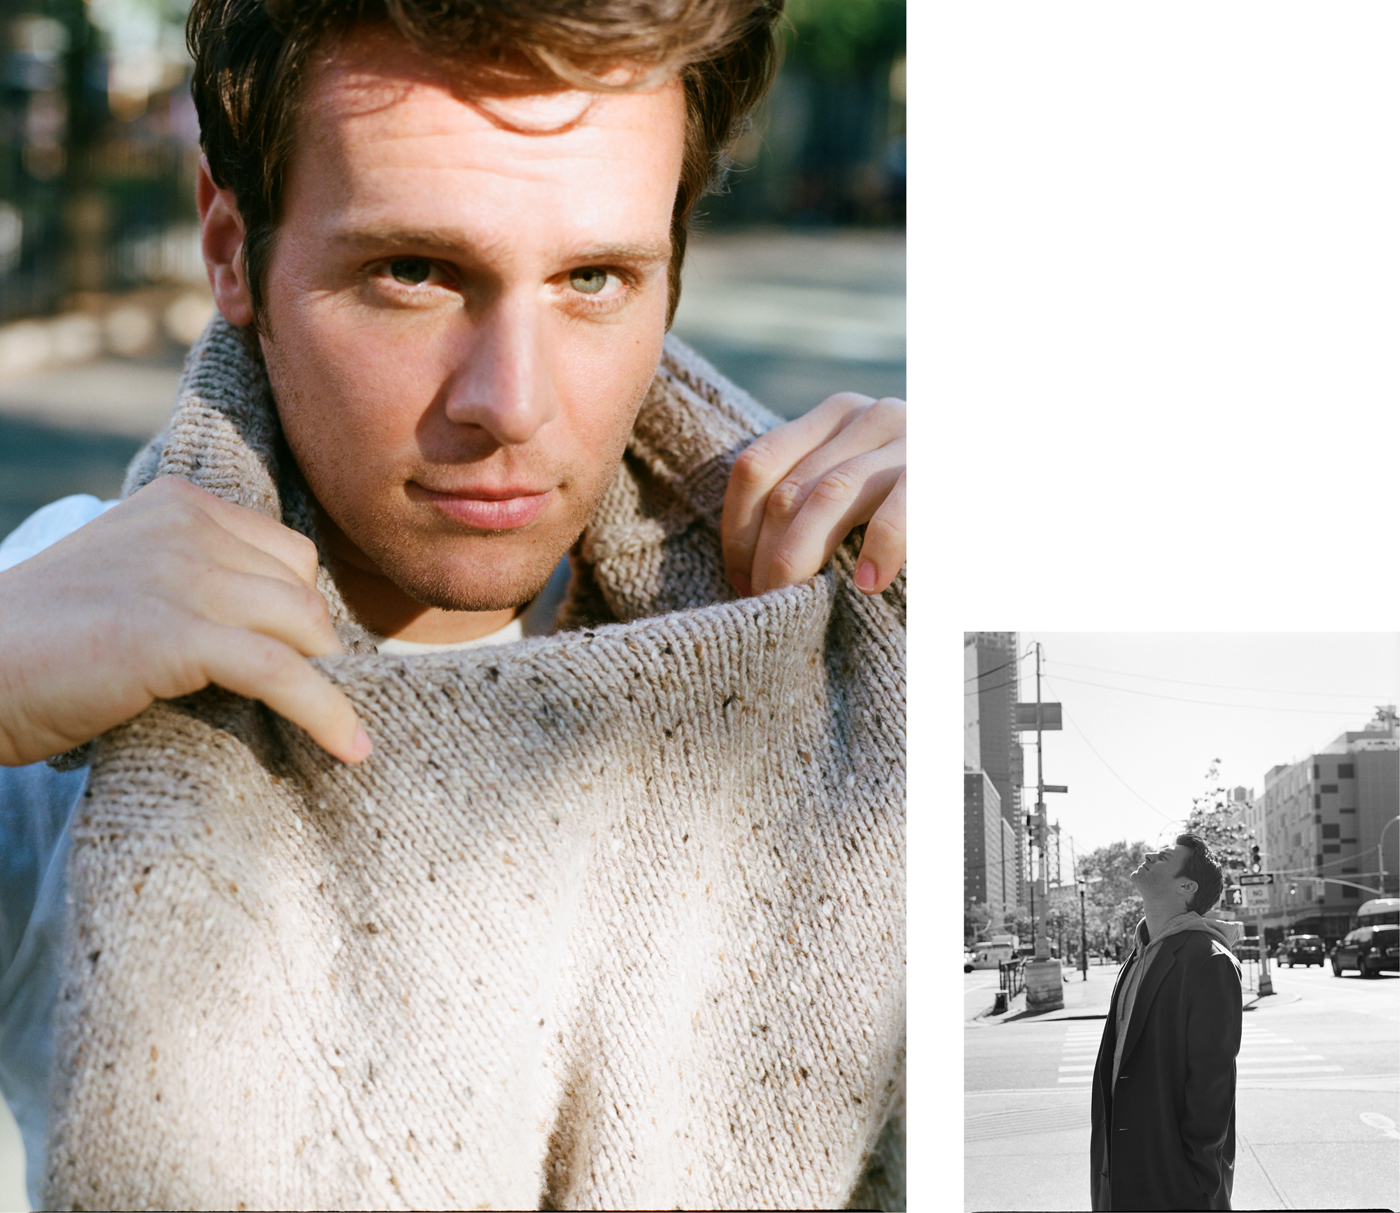 Left: Sweater by Deveaux. T-shirt by Hanes.Right: Coat by Acne Studios. Sweatshirt by Calvin Klein.